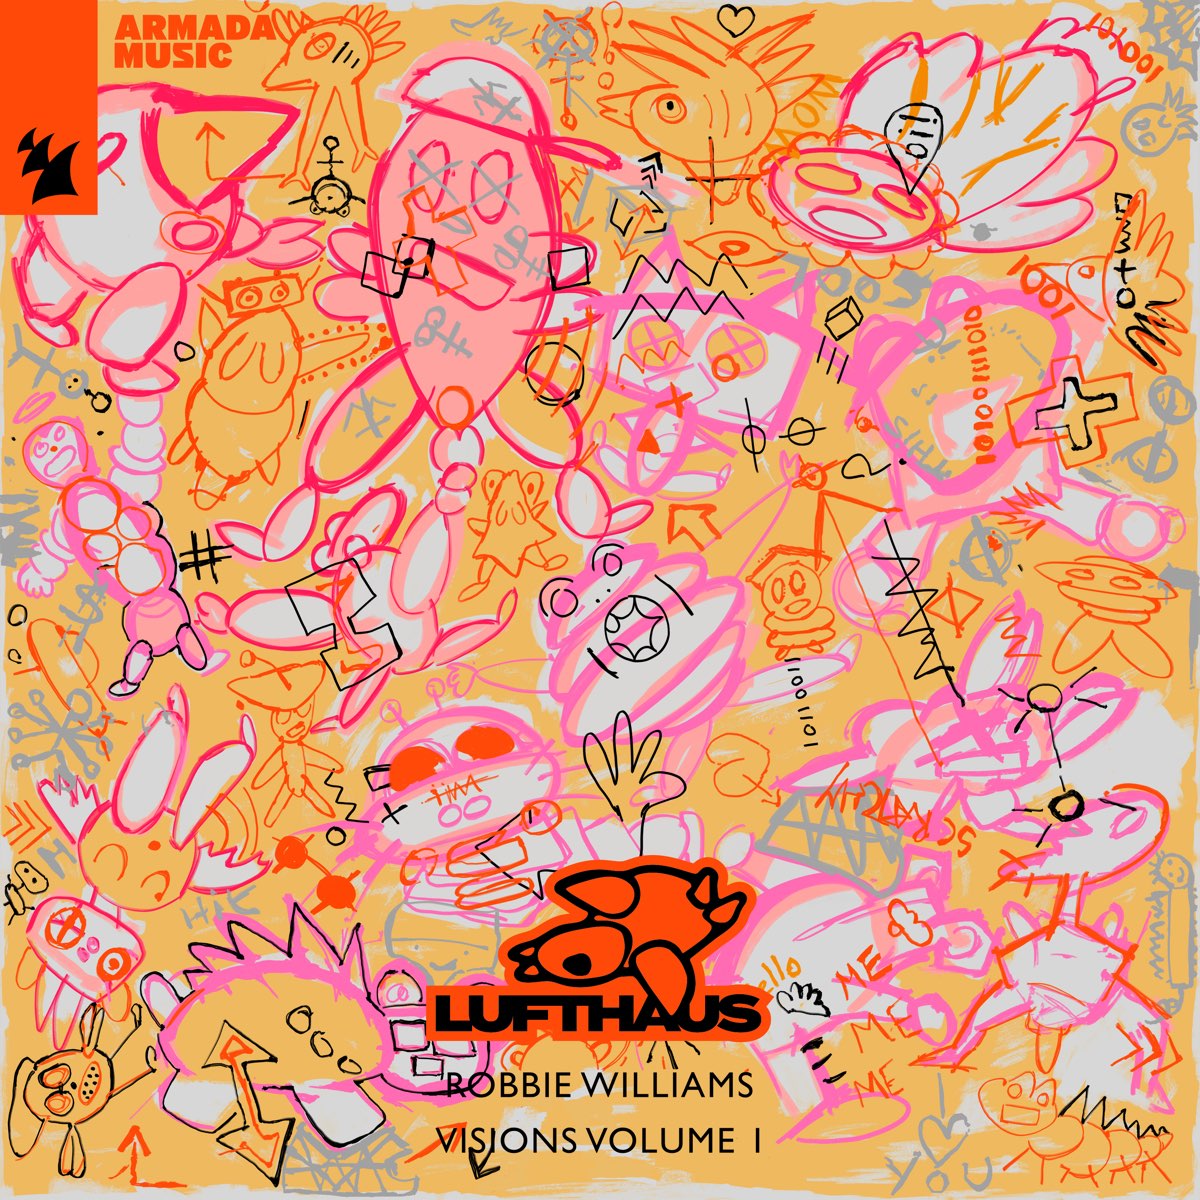 Lufthaus & Robbie Williams Visions, Vol. 1 cover artwork